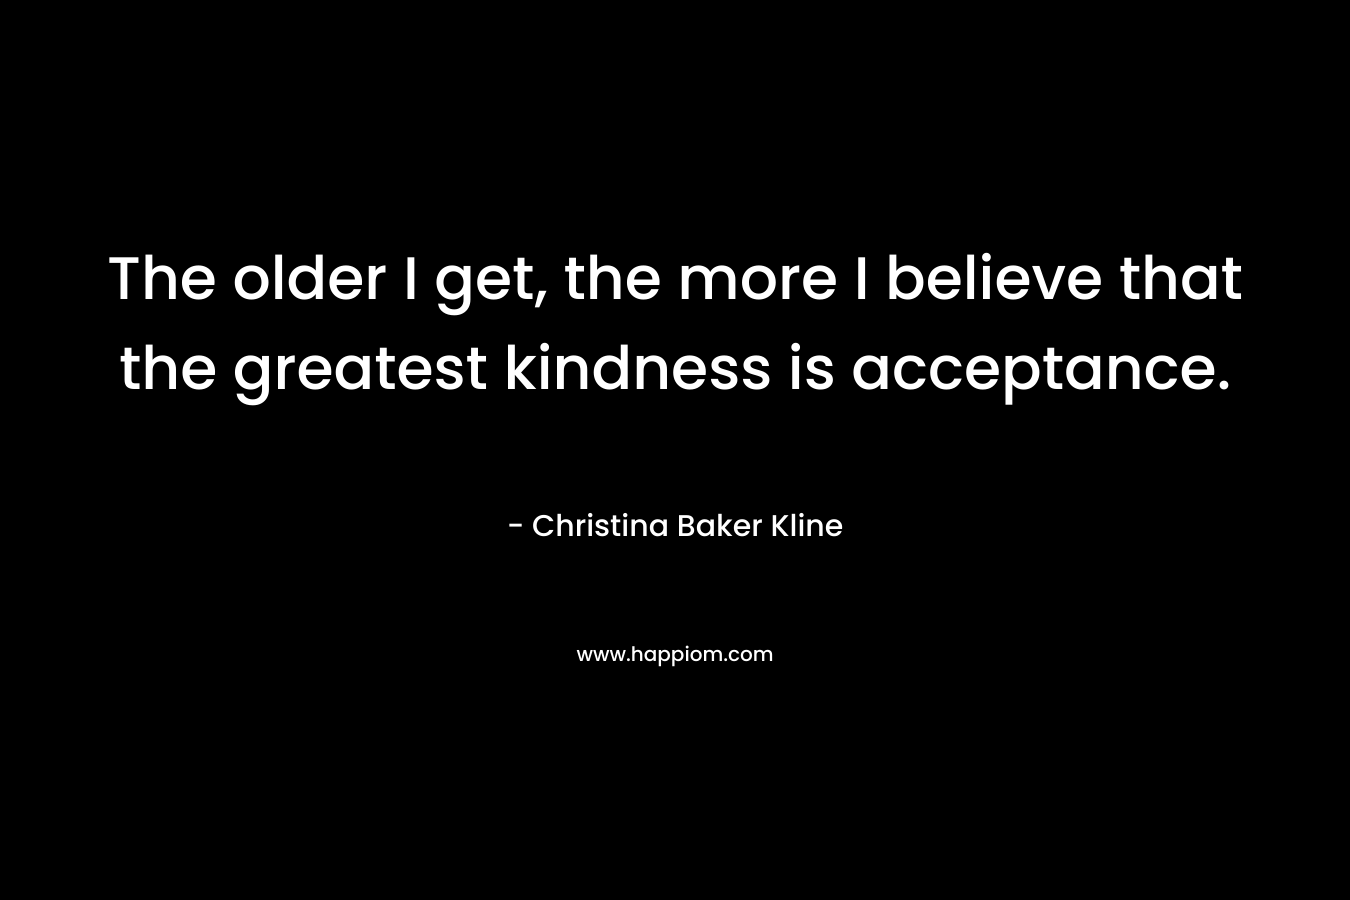 The older I get, the more I believe that the greatest kindness is acceptance. – Christina Baker Kline